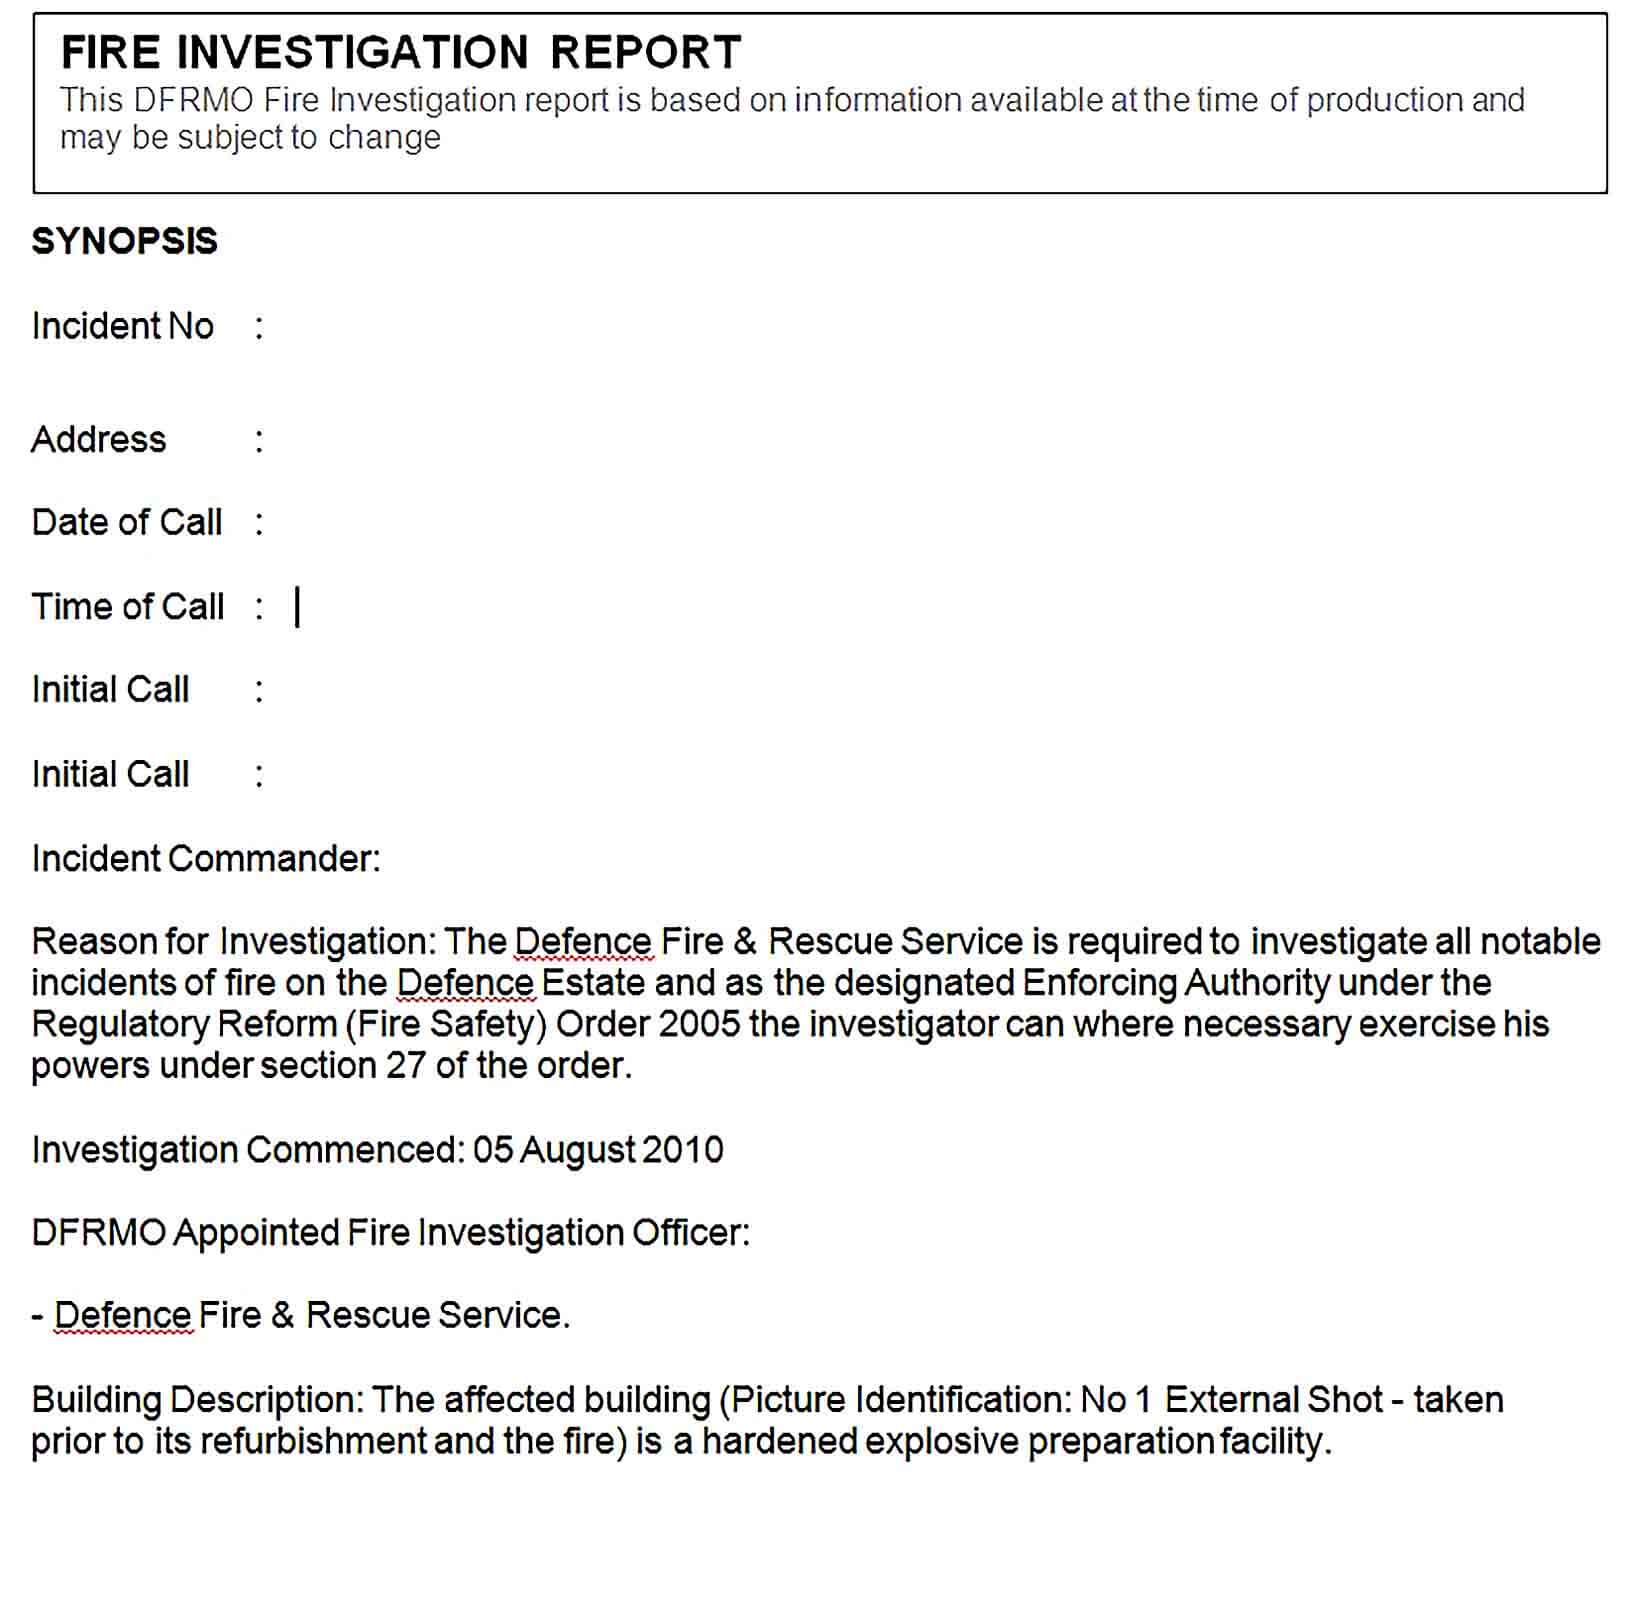 Sample fire investigation report